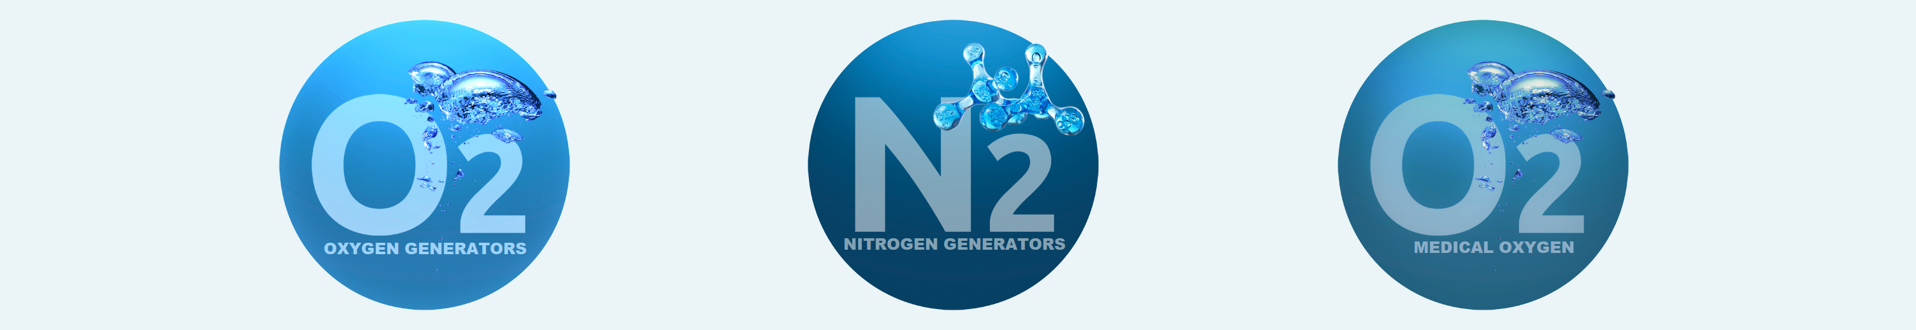 nitrogen generators oxygen generator price sale